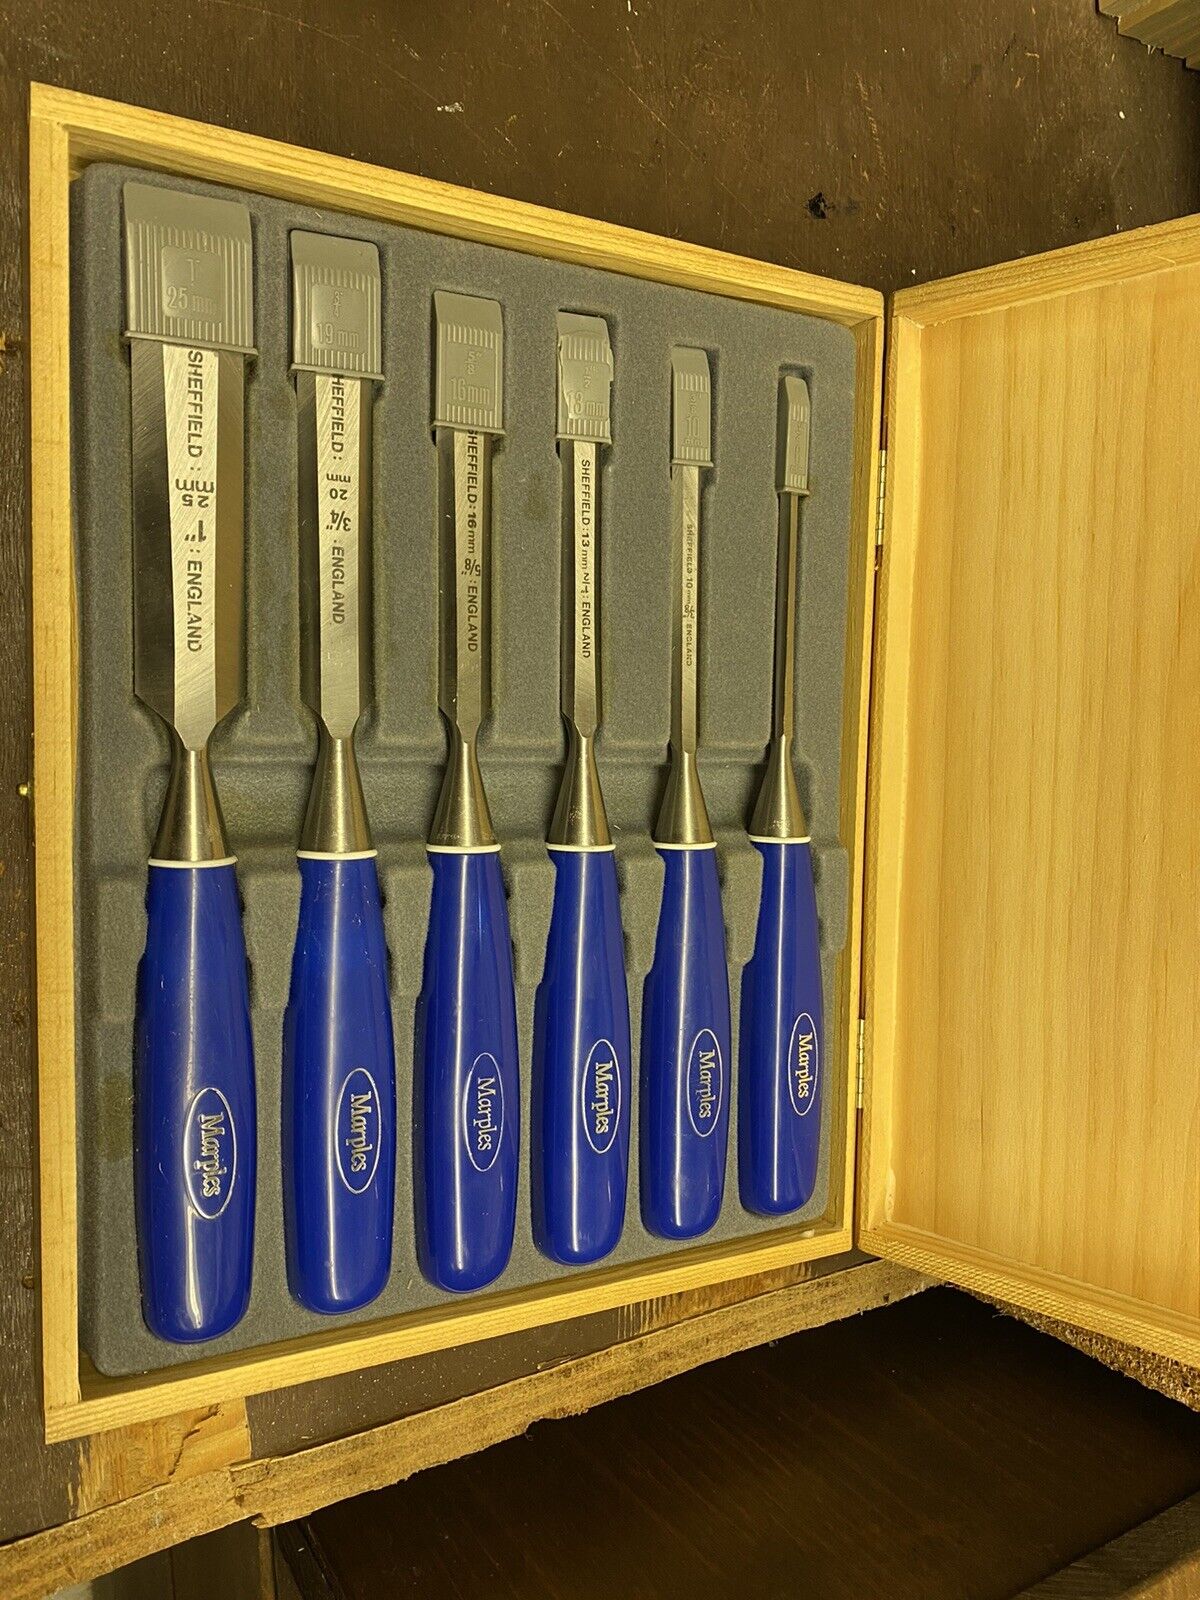 Set of 6 Marples Blue Chip Chisels - Original Wood Case Box - Sheffield England